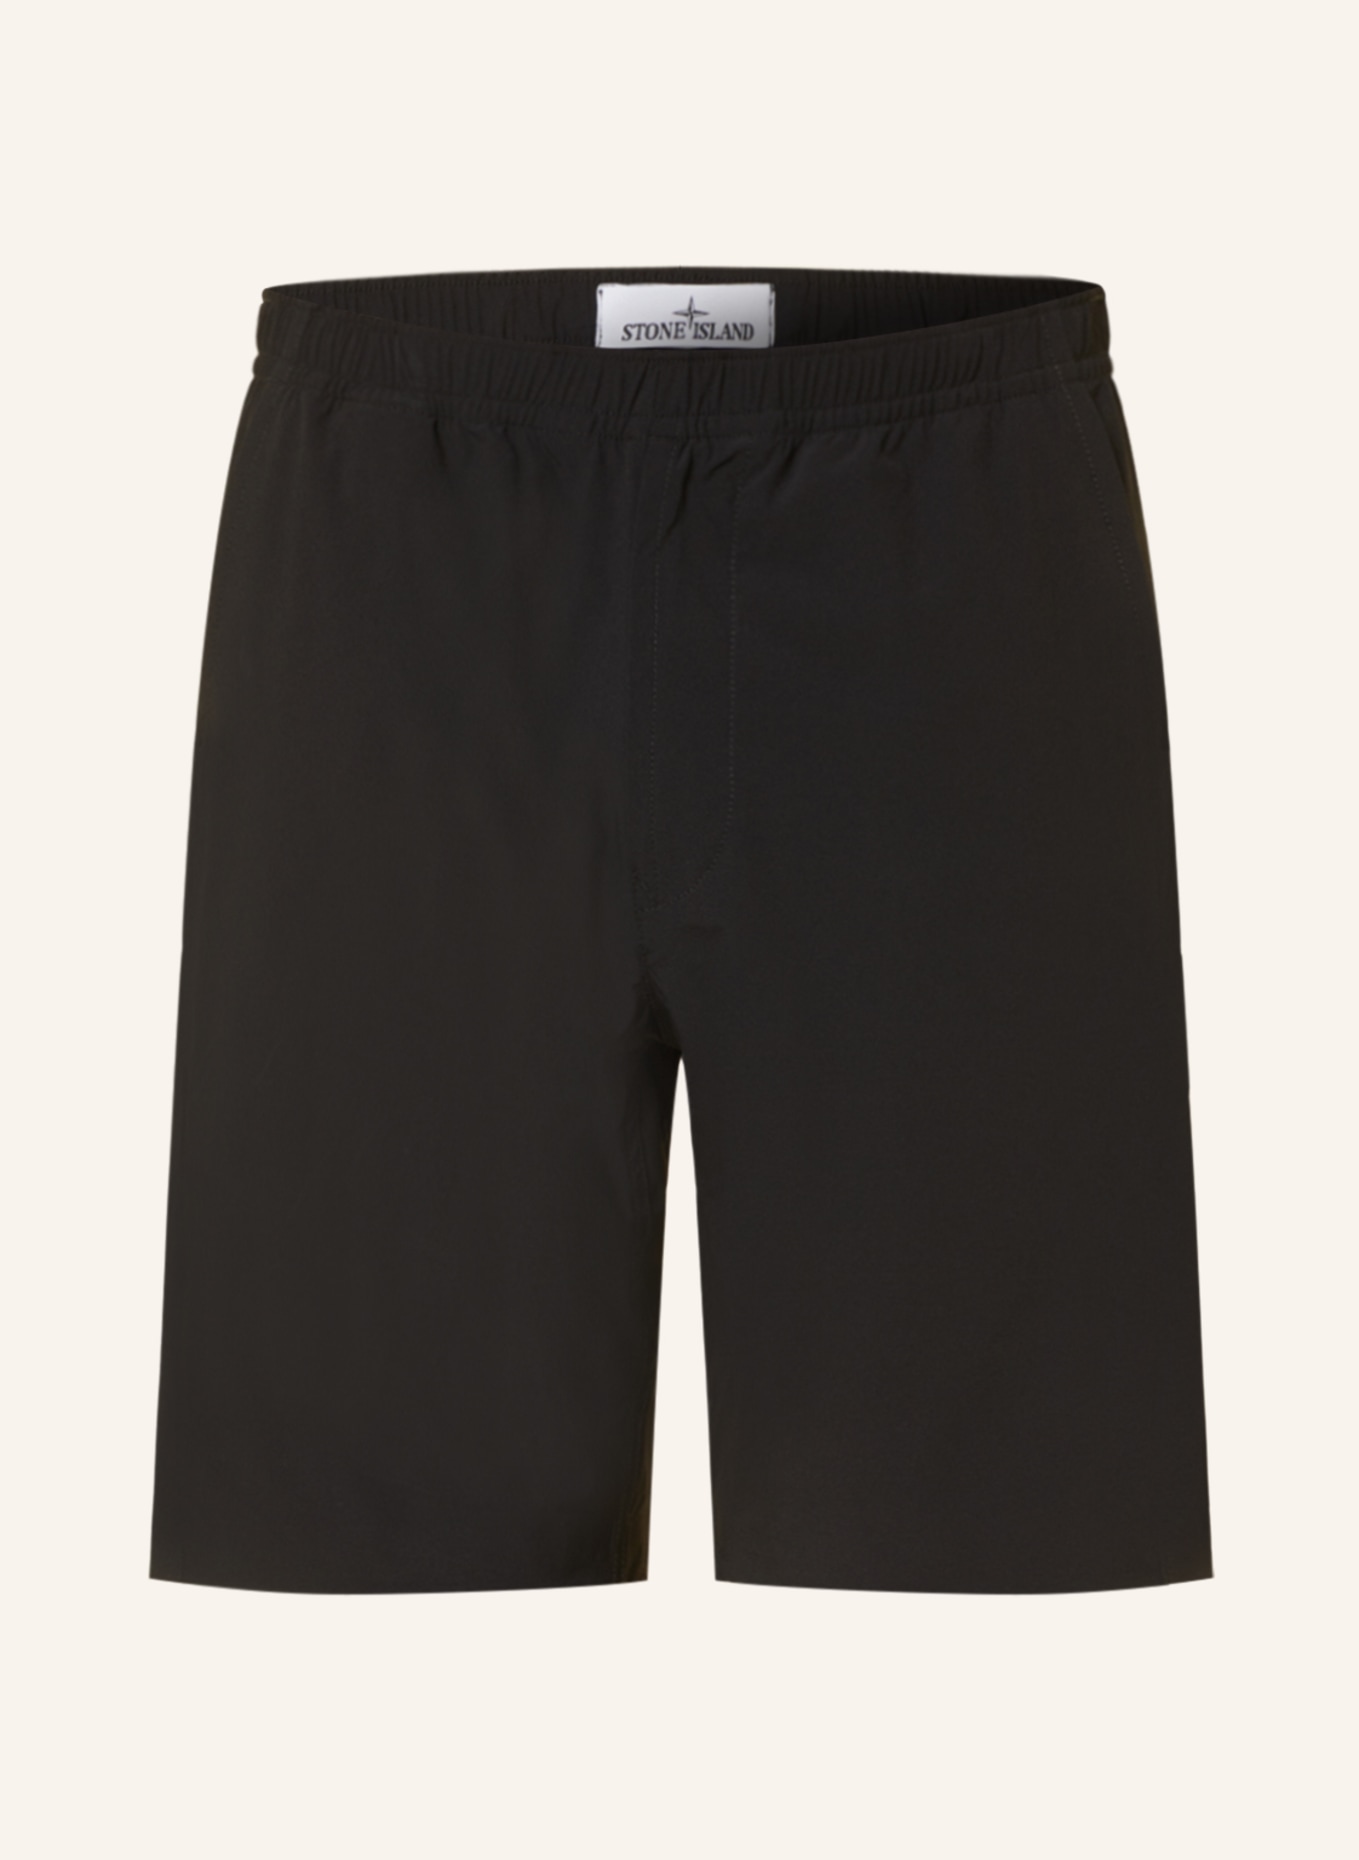 STONE ISLAND Shorts, Farbe: SCHWARZ (Bild 1)